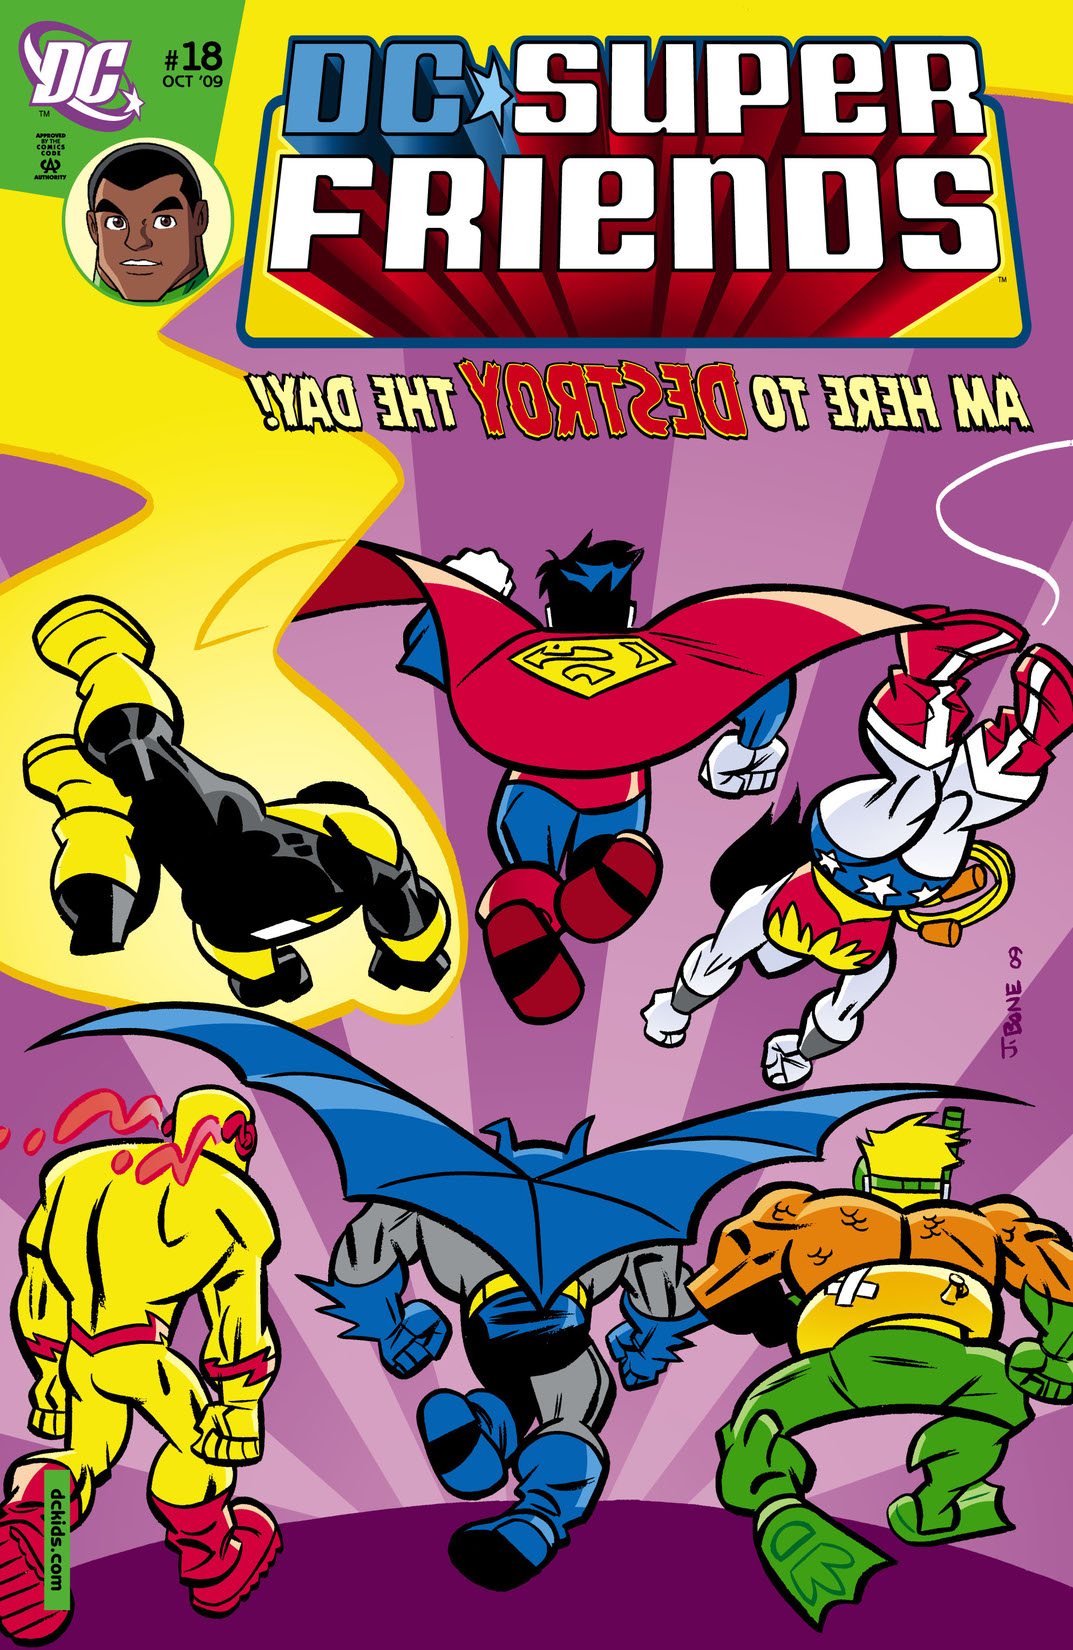 Super Friends (2008-) #18 preview images